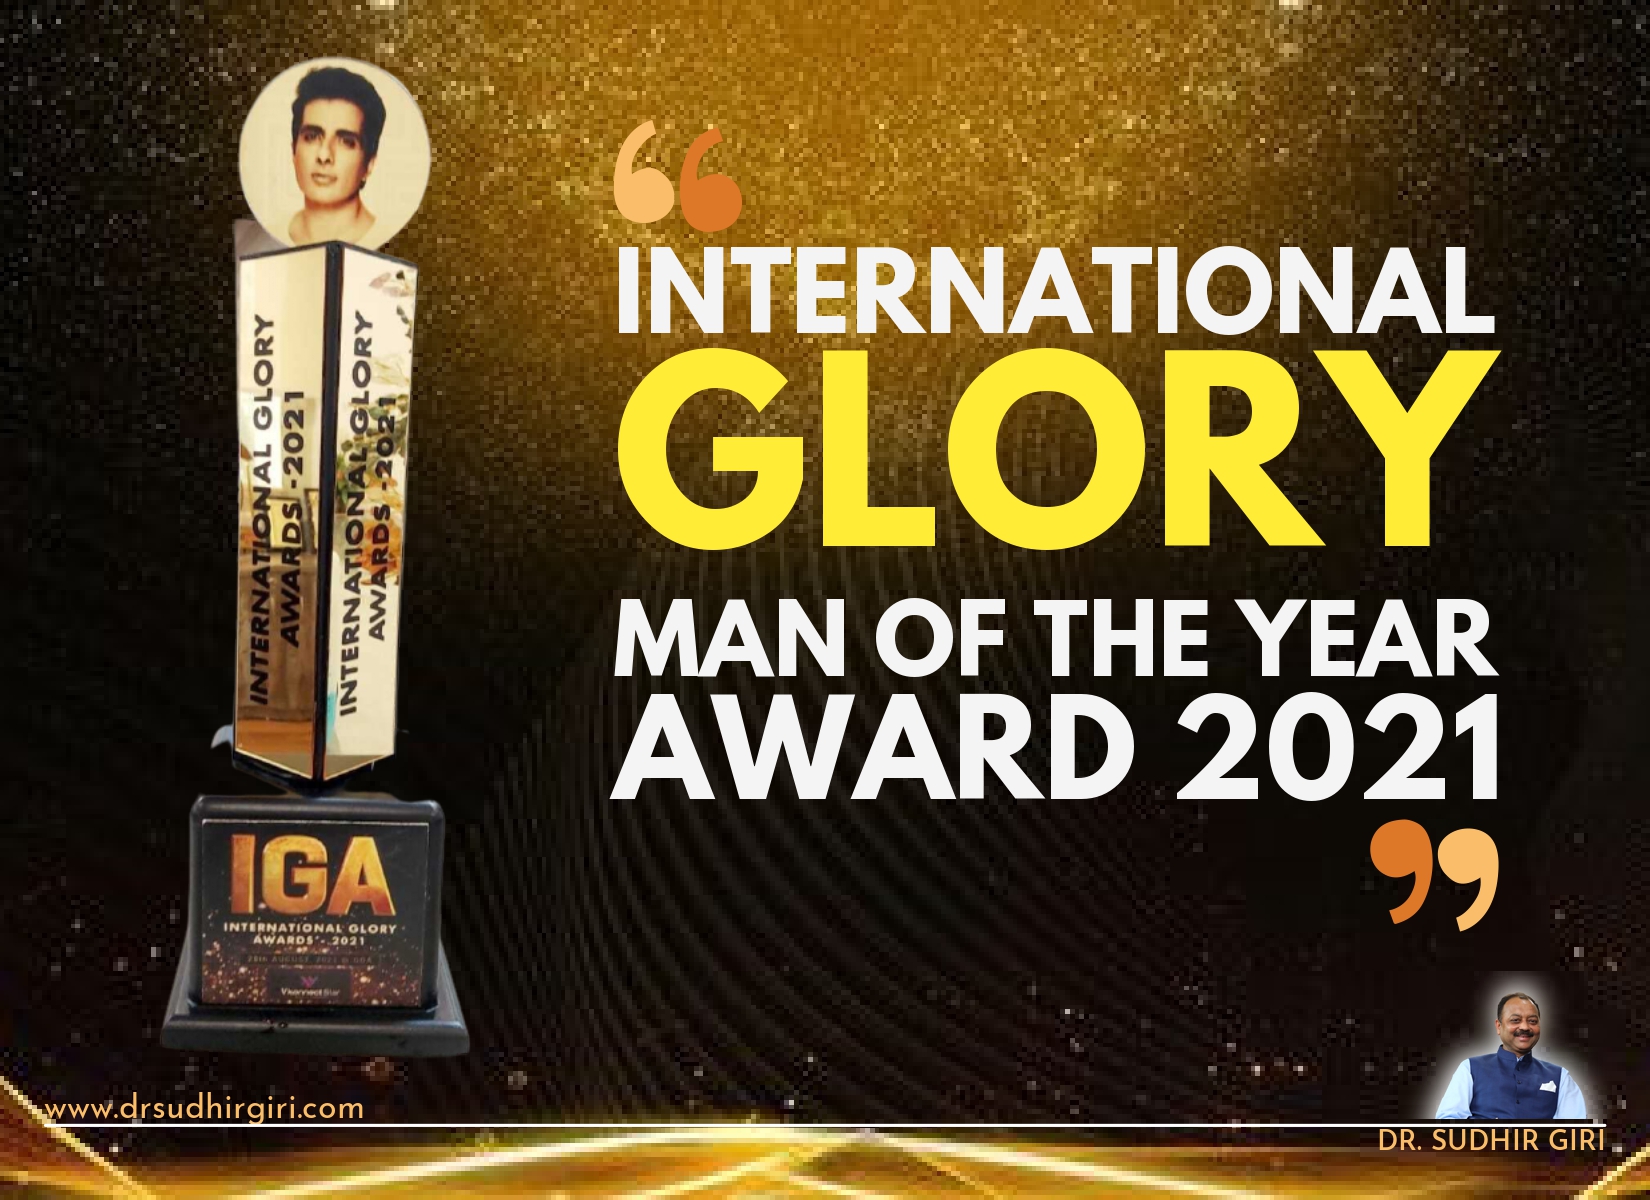 Sudhir Giri - International glory Man of the Year Award 2021